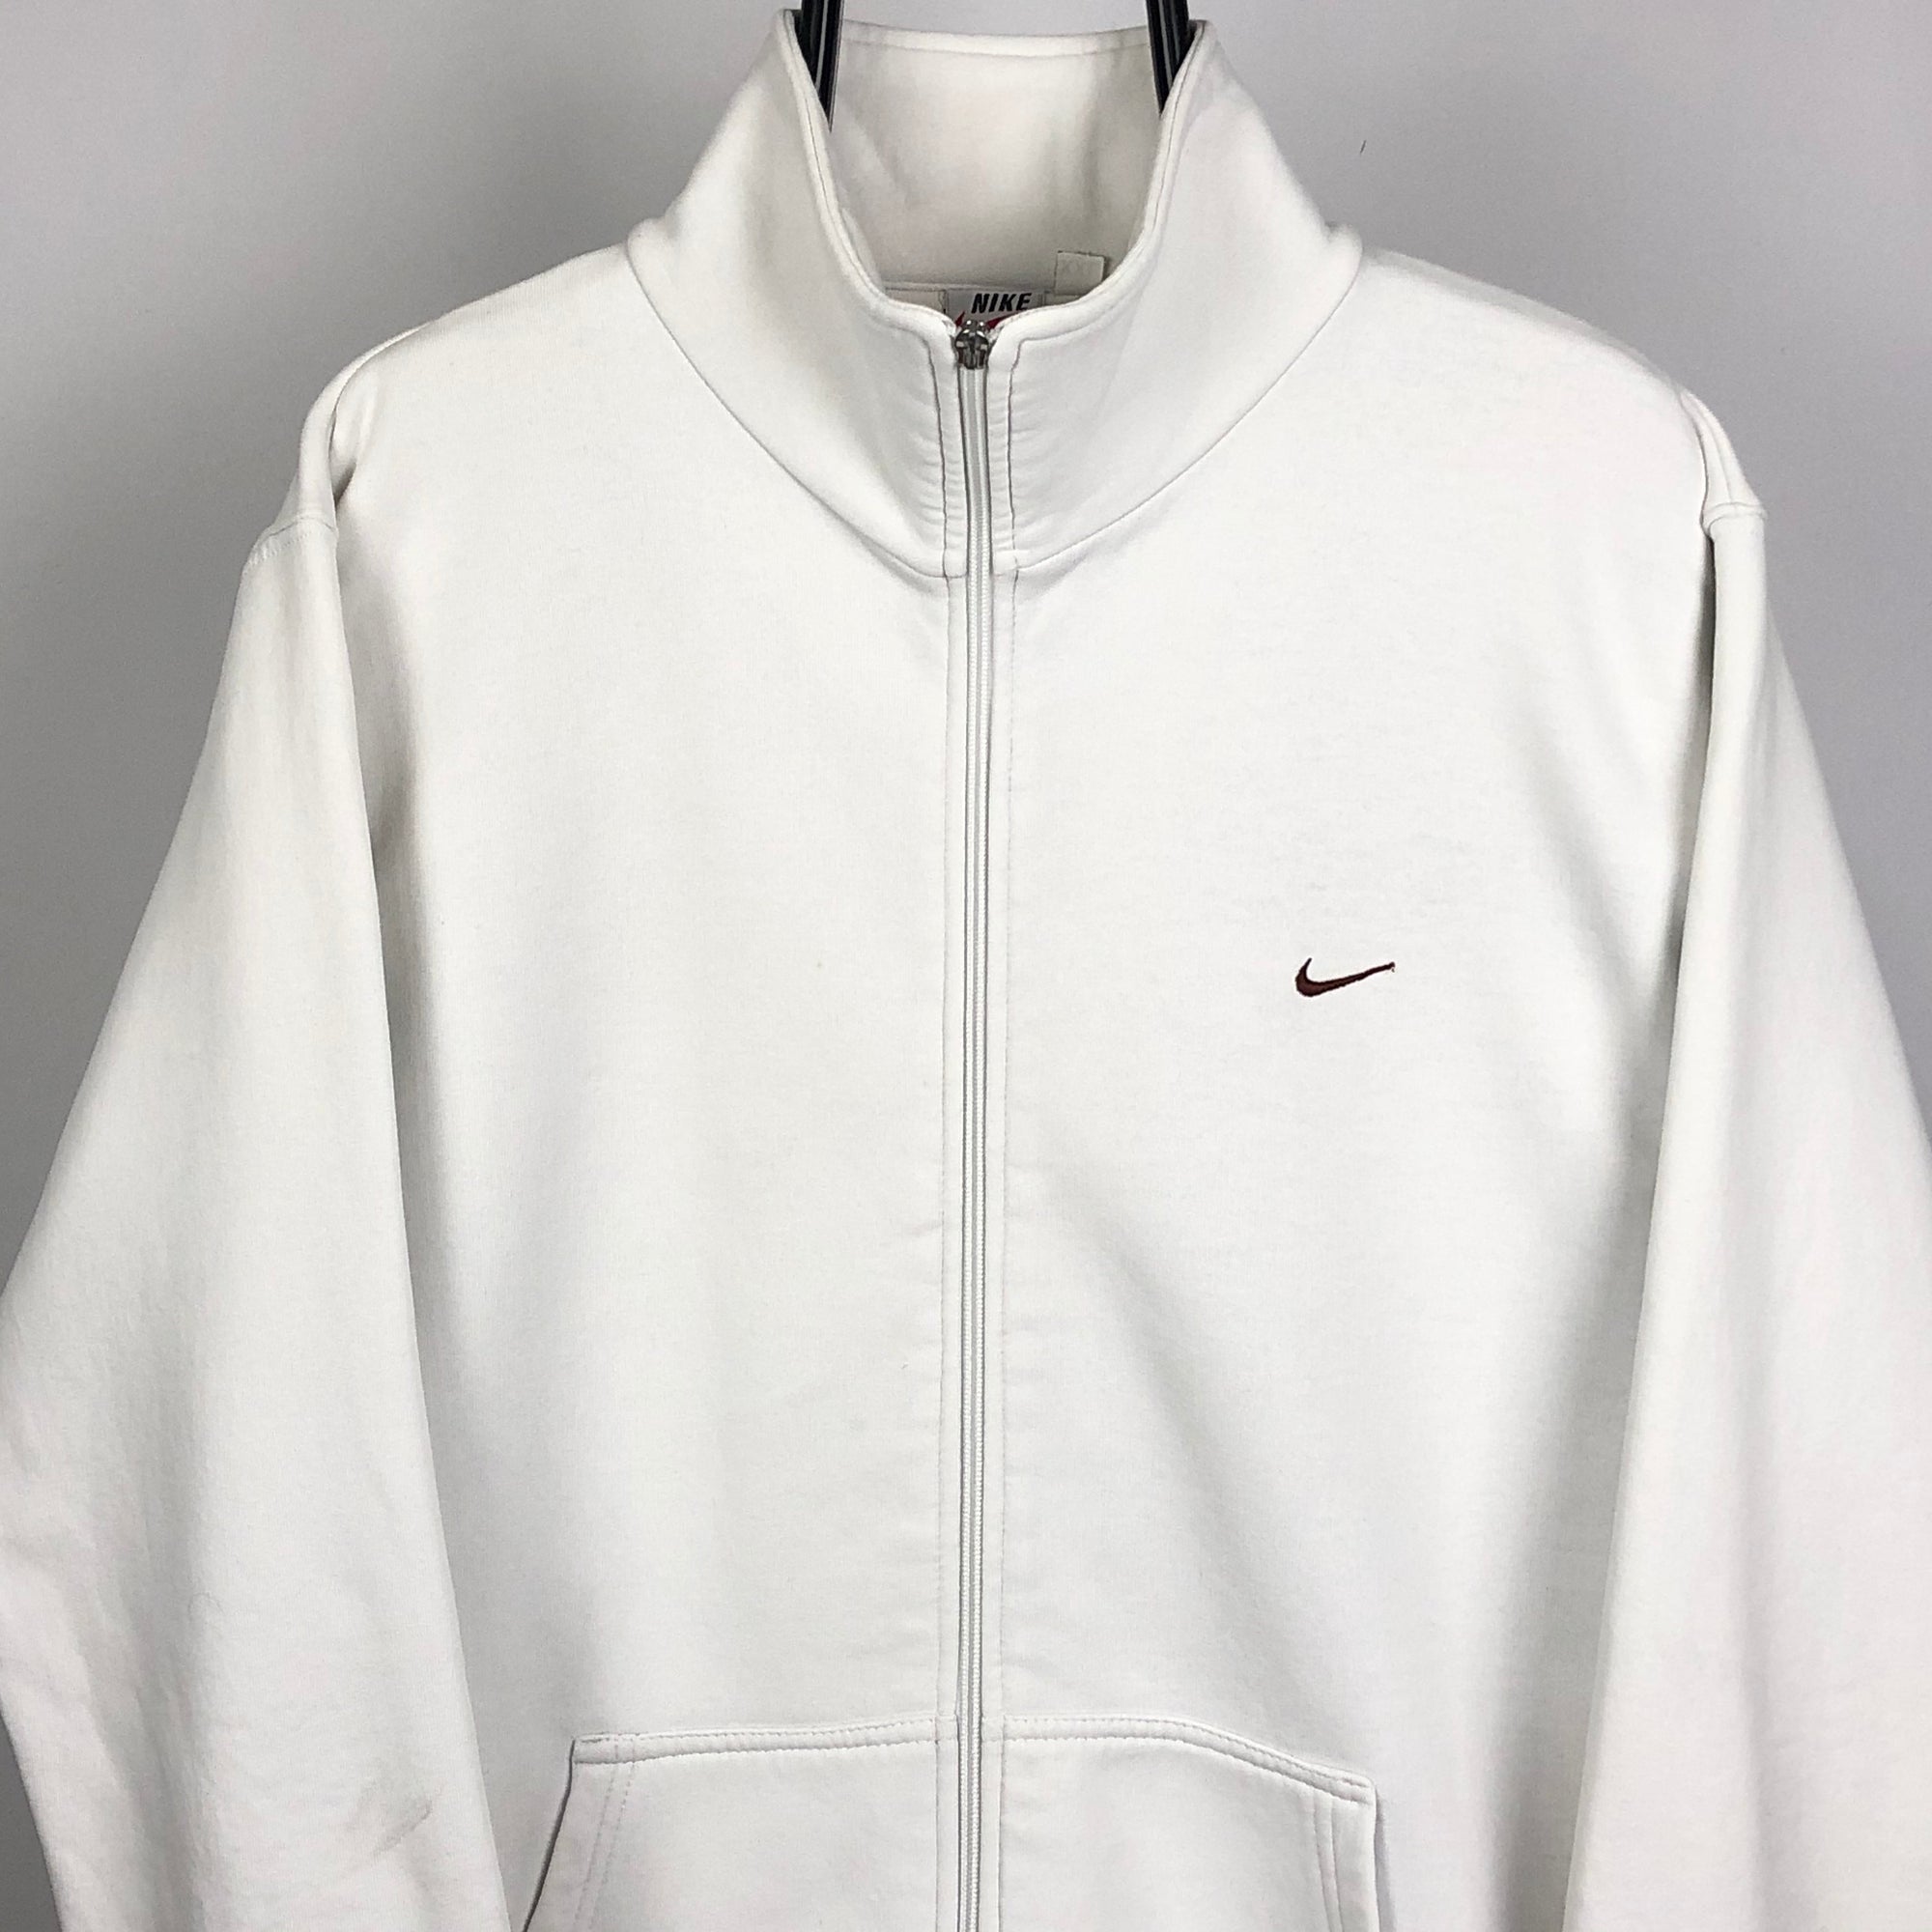 Nike Zip Up Sweatshirt in White - Men's Large/Women's XL